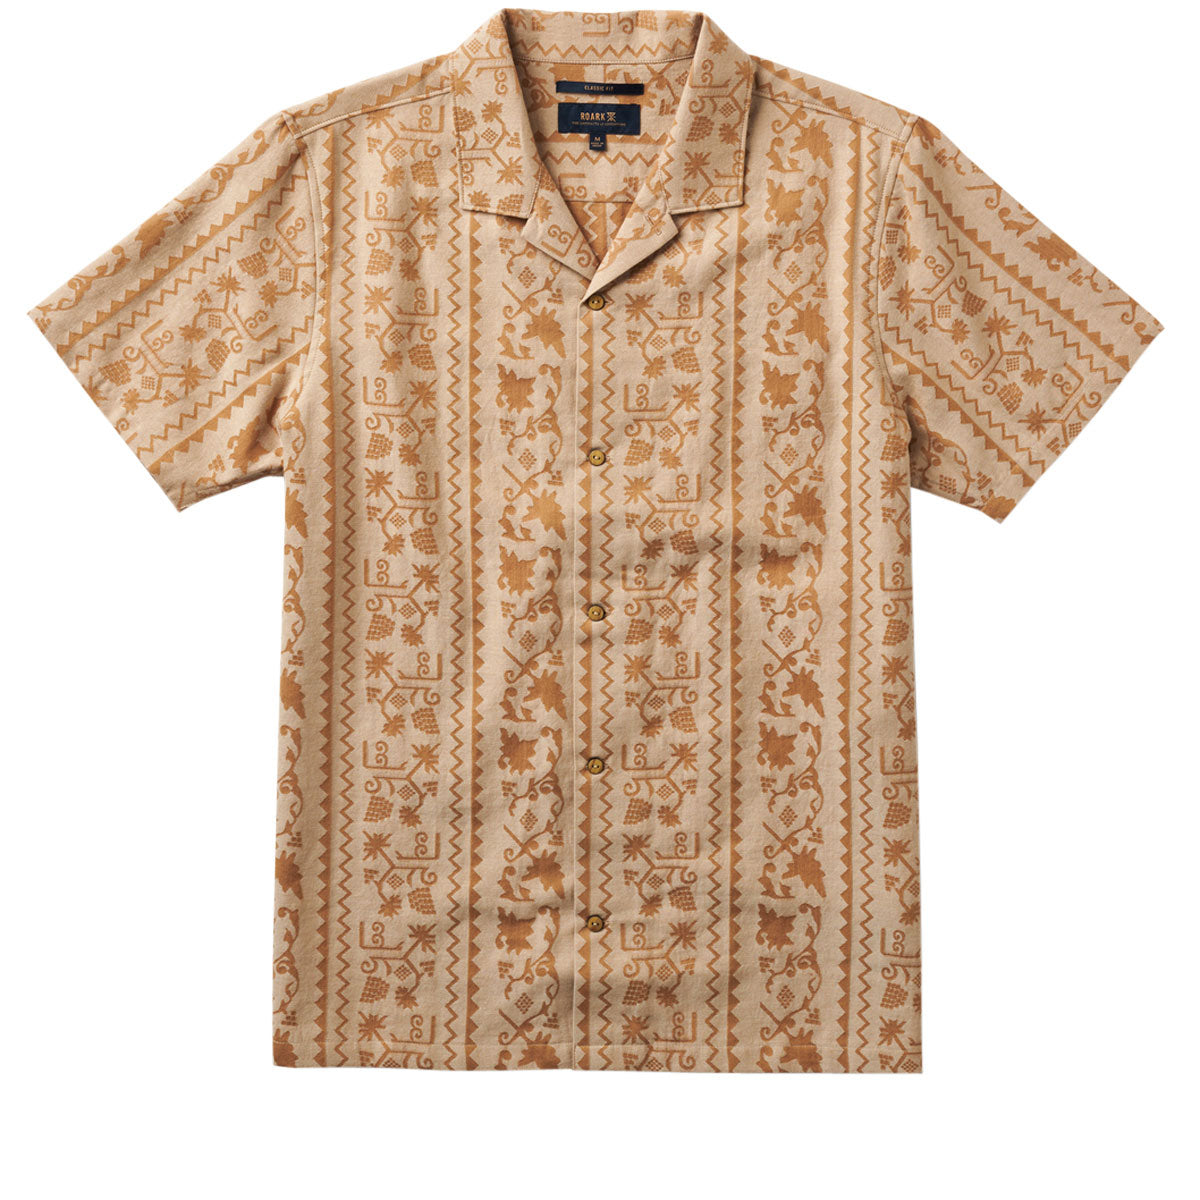 Roark Gonzo Woven Shirt - Sarda Almond image 3